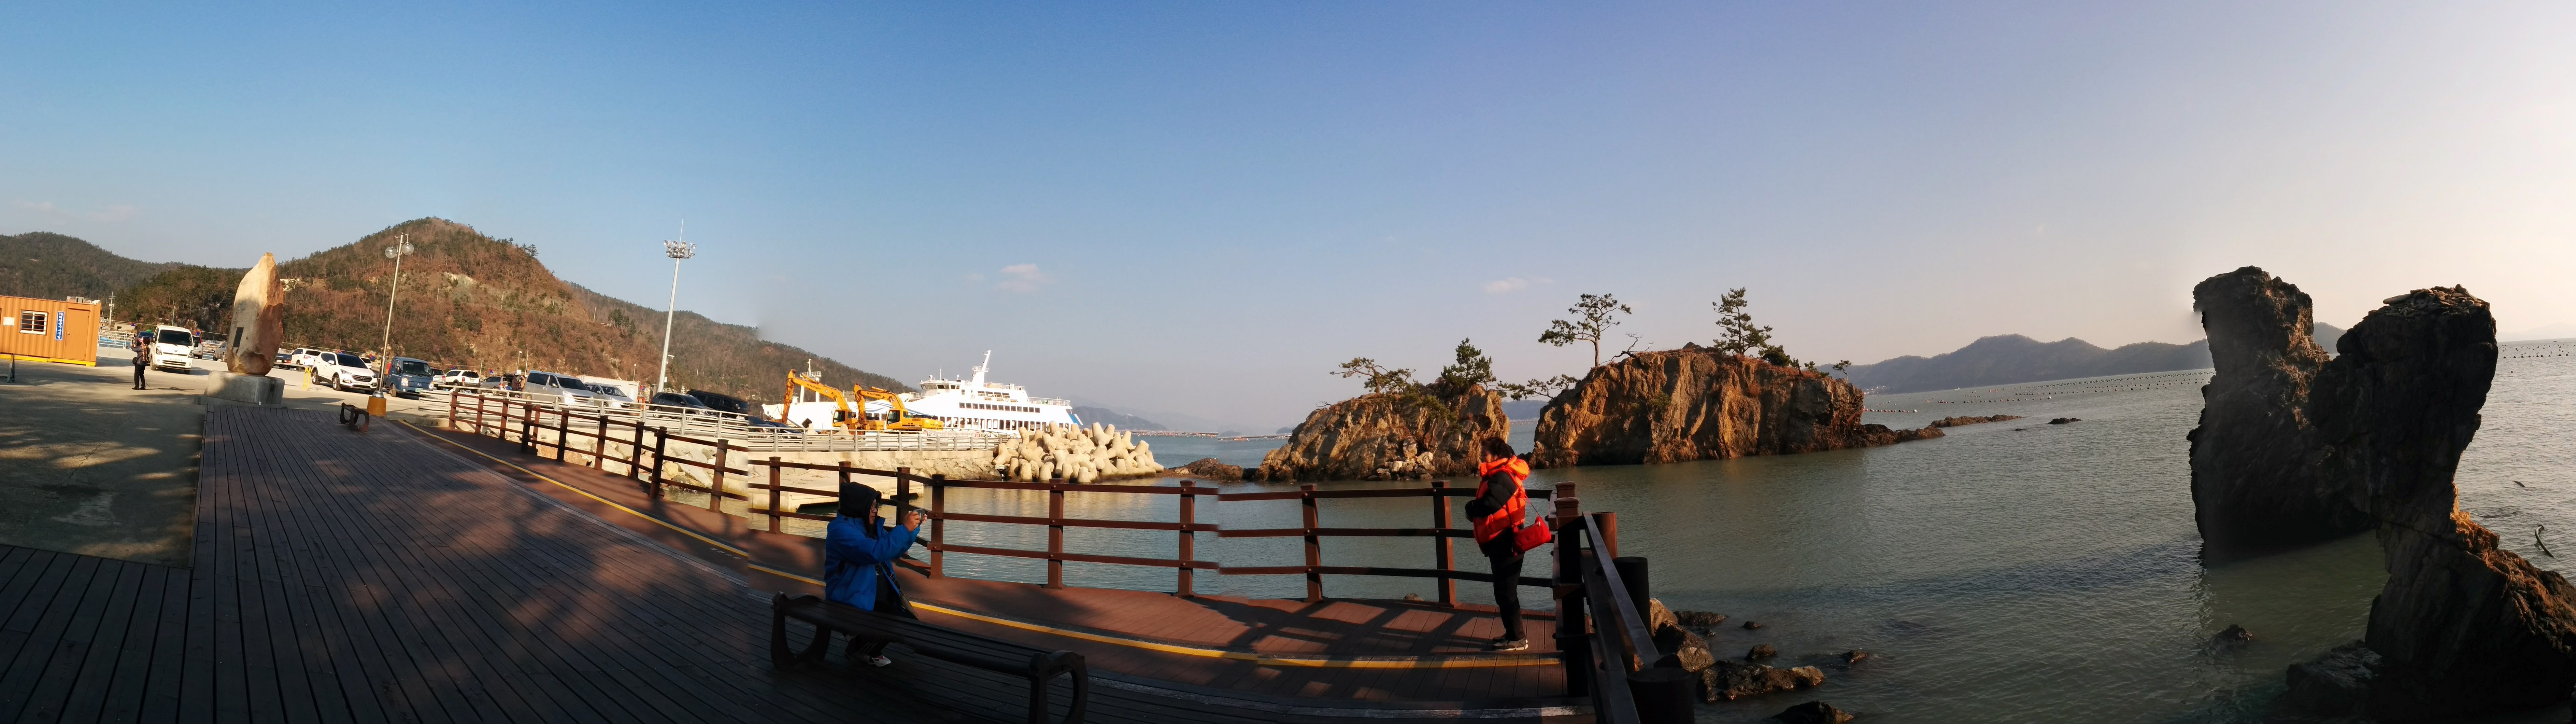 PANO_20151229_145918.jpg 해남 땅끝마을관광지 앞 바다 풍경 파노라마 사진